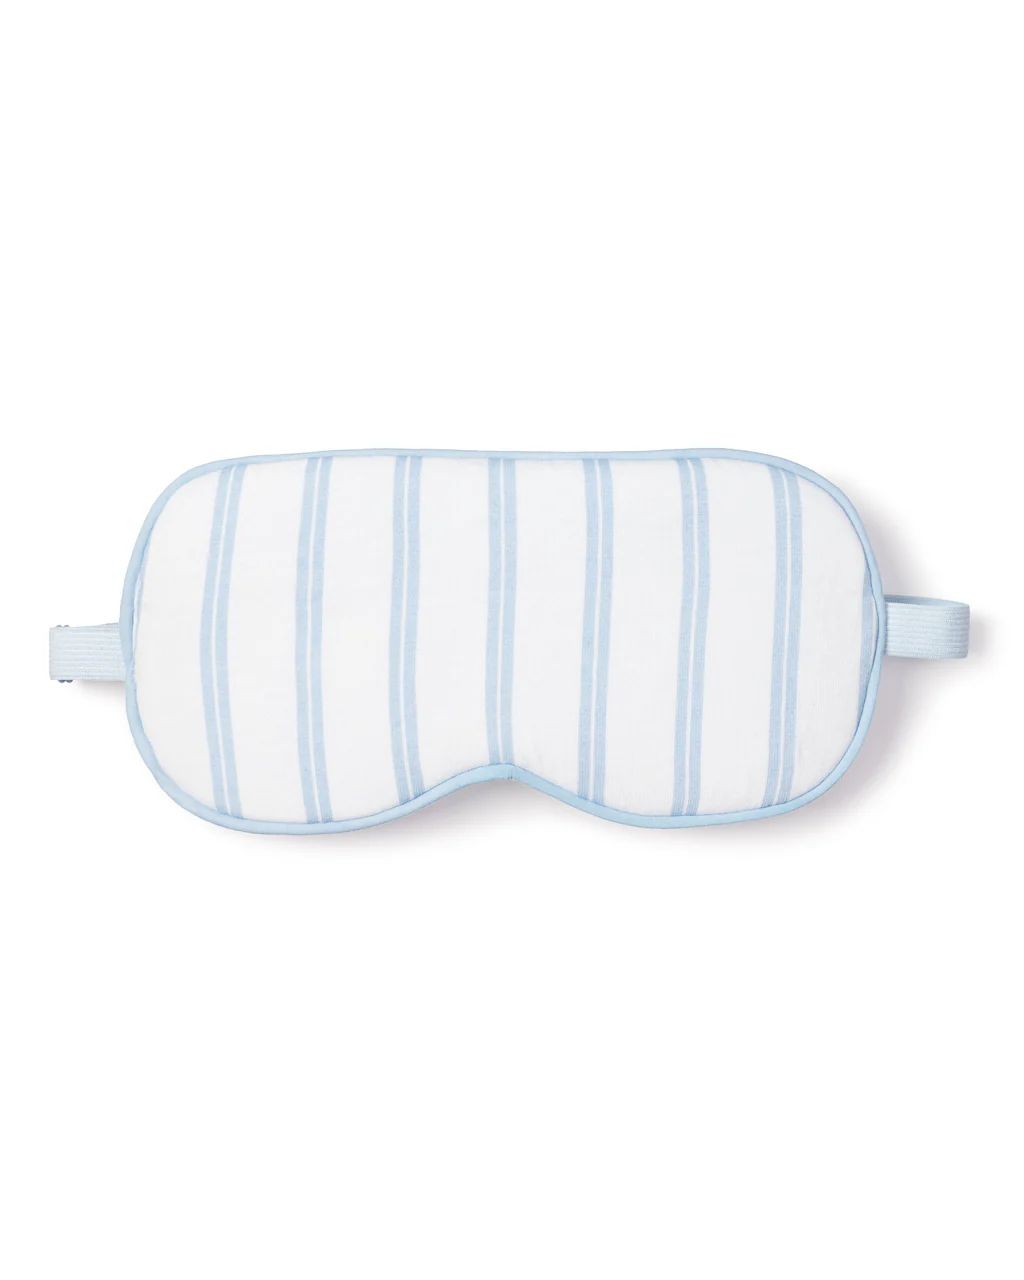 Adult's Sleep Mask in Periwinkle Stripe | Petite Plume